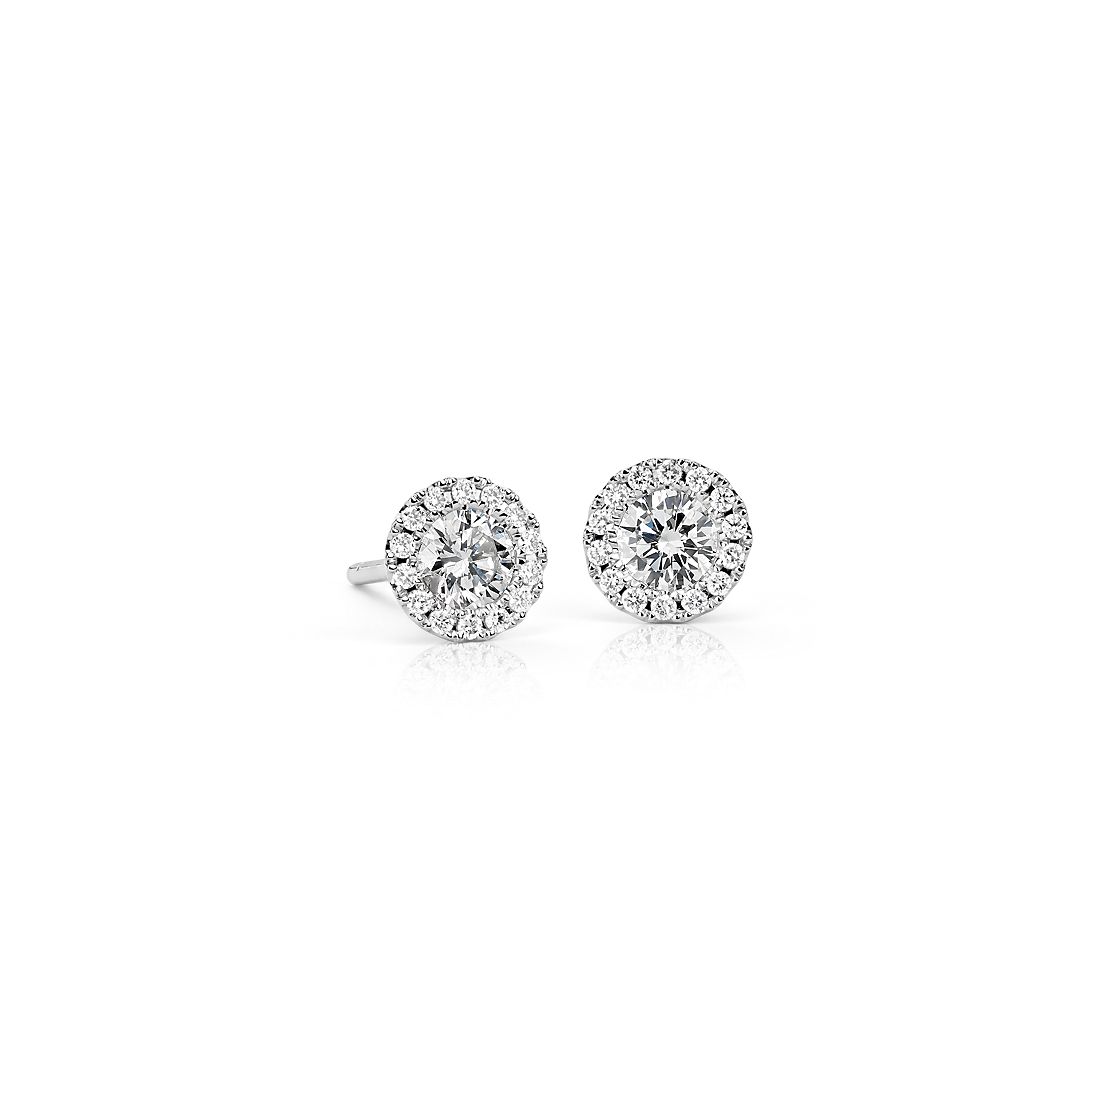 Martini Halo Diamond Earrings in 14k White Gold